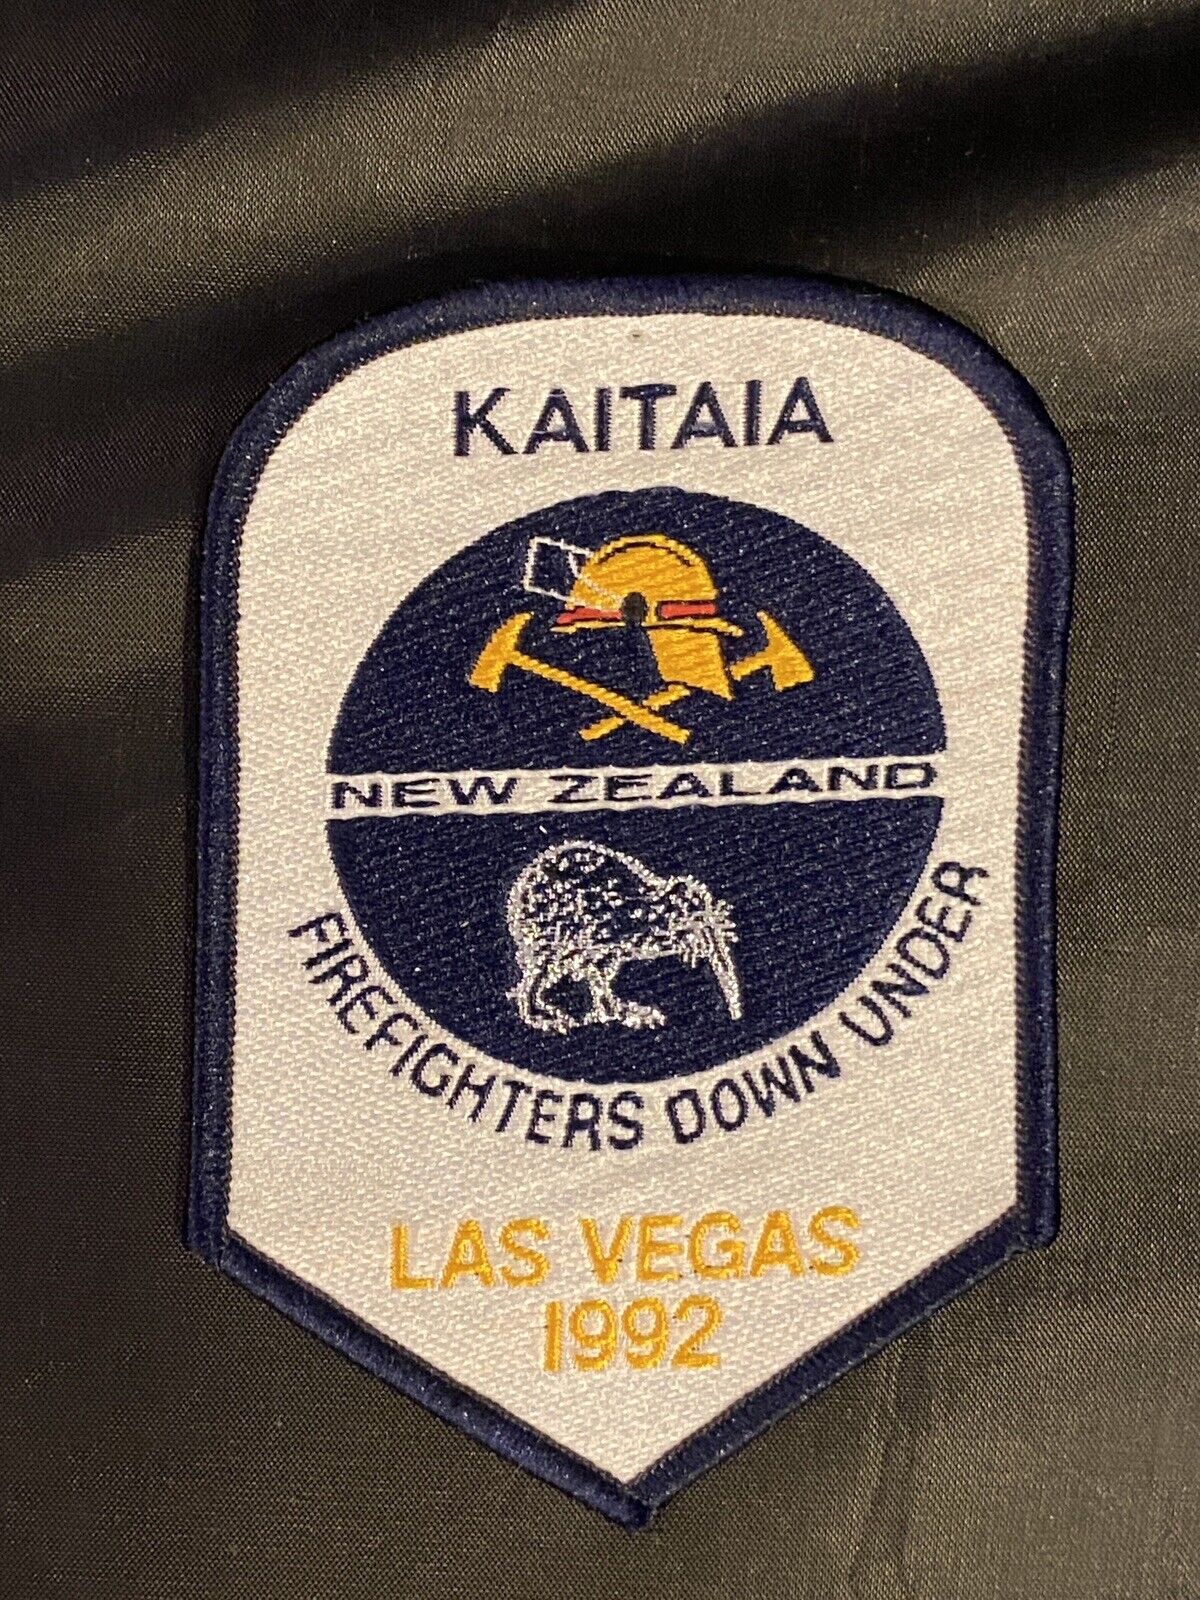 Very Rare Las Vegas Fireman Patch Fire Dept New Zealand Kaitaia 1992 Kiwi Badge